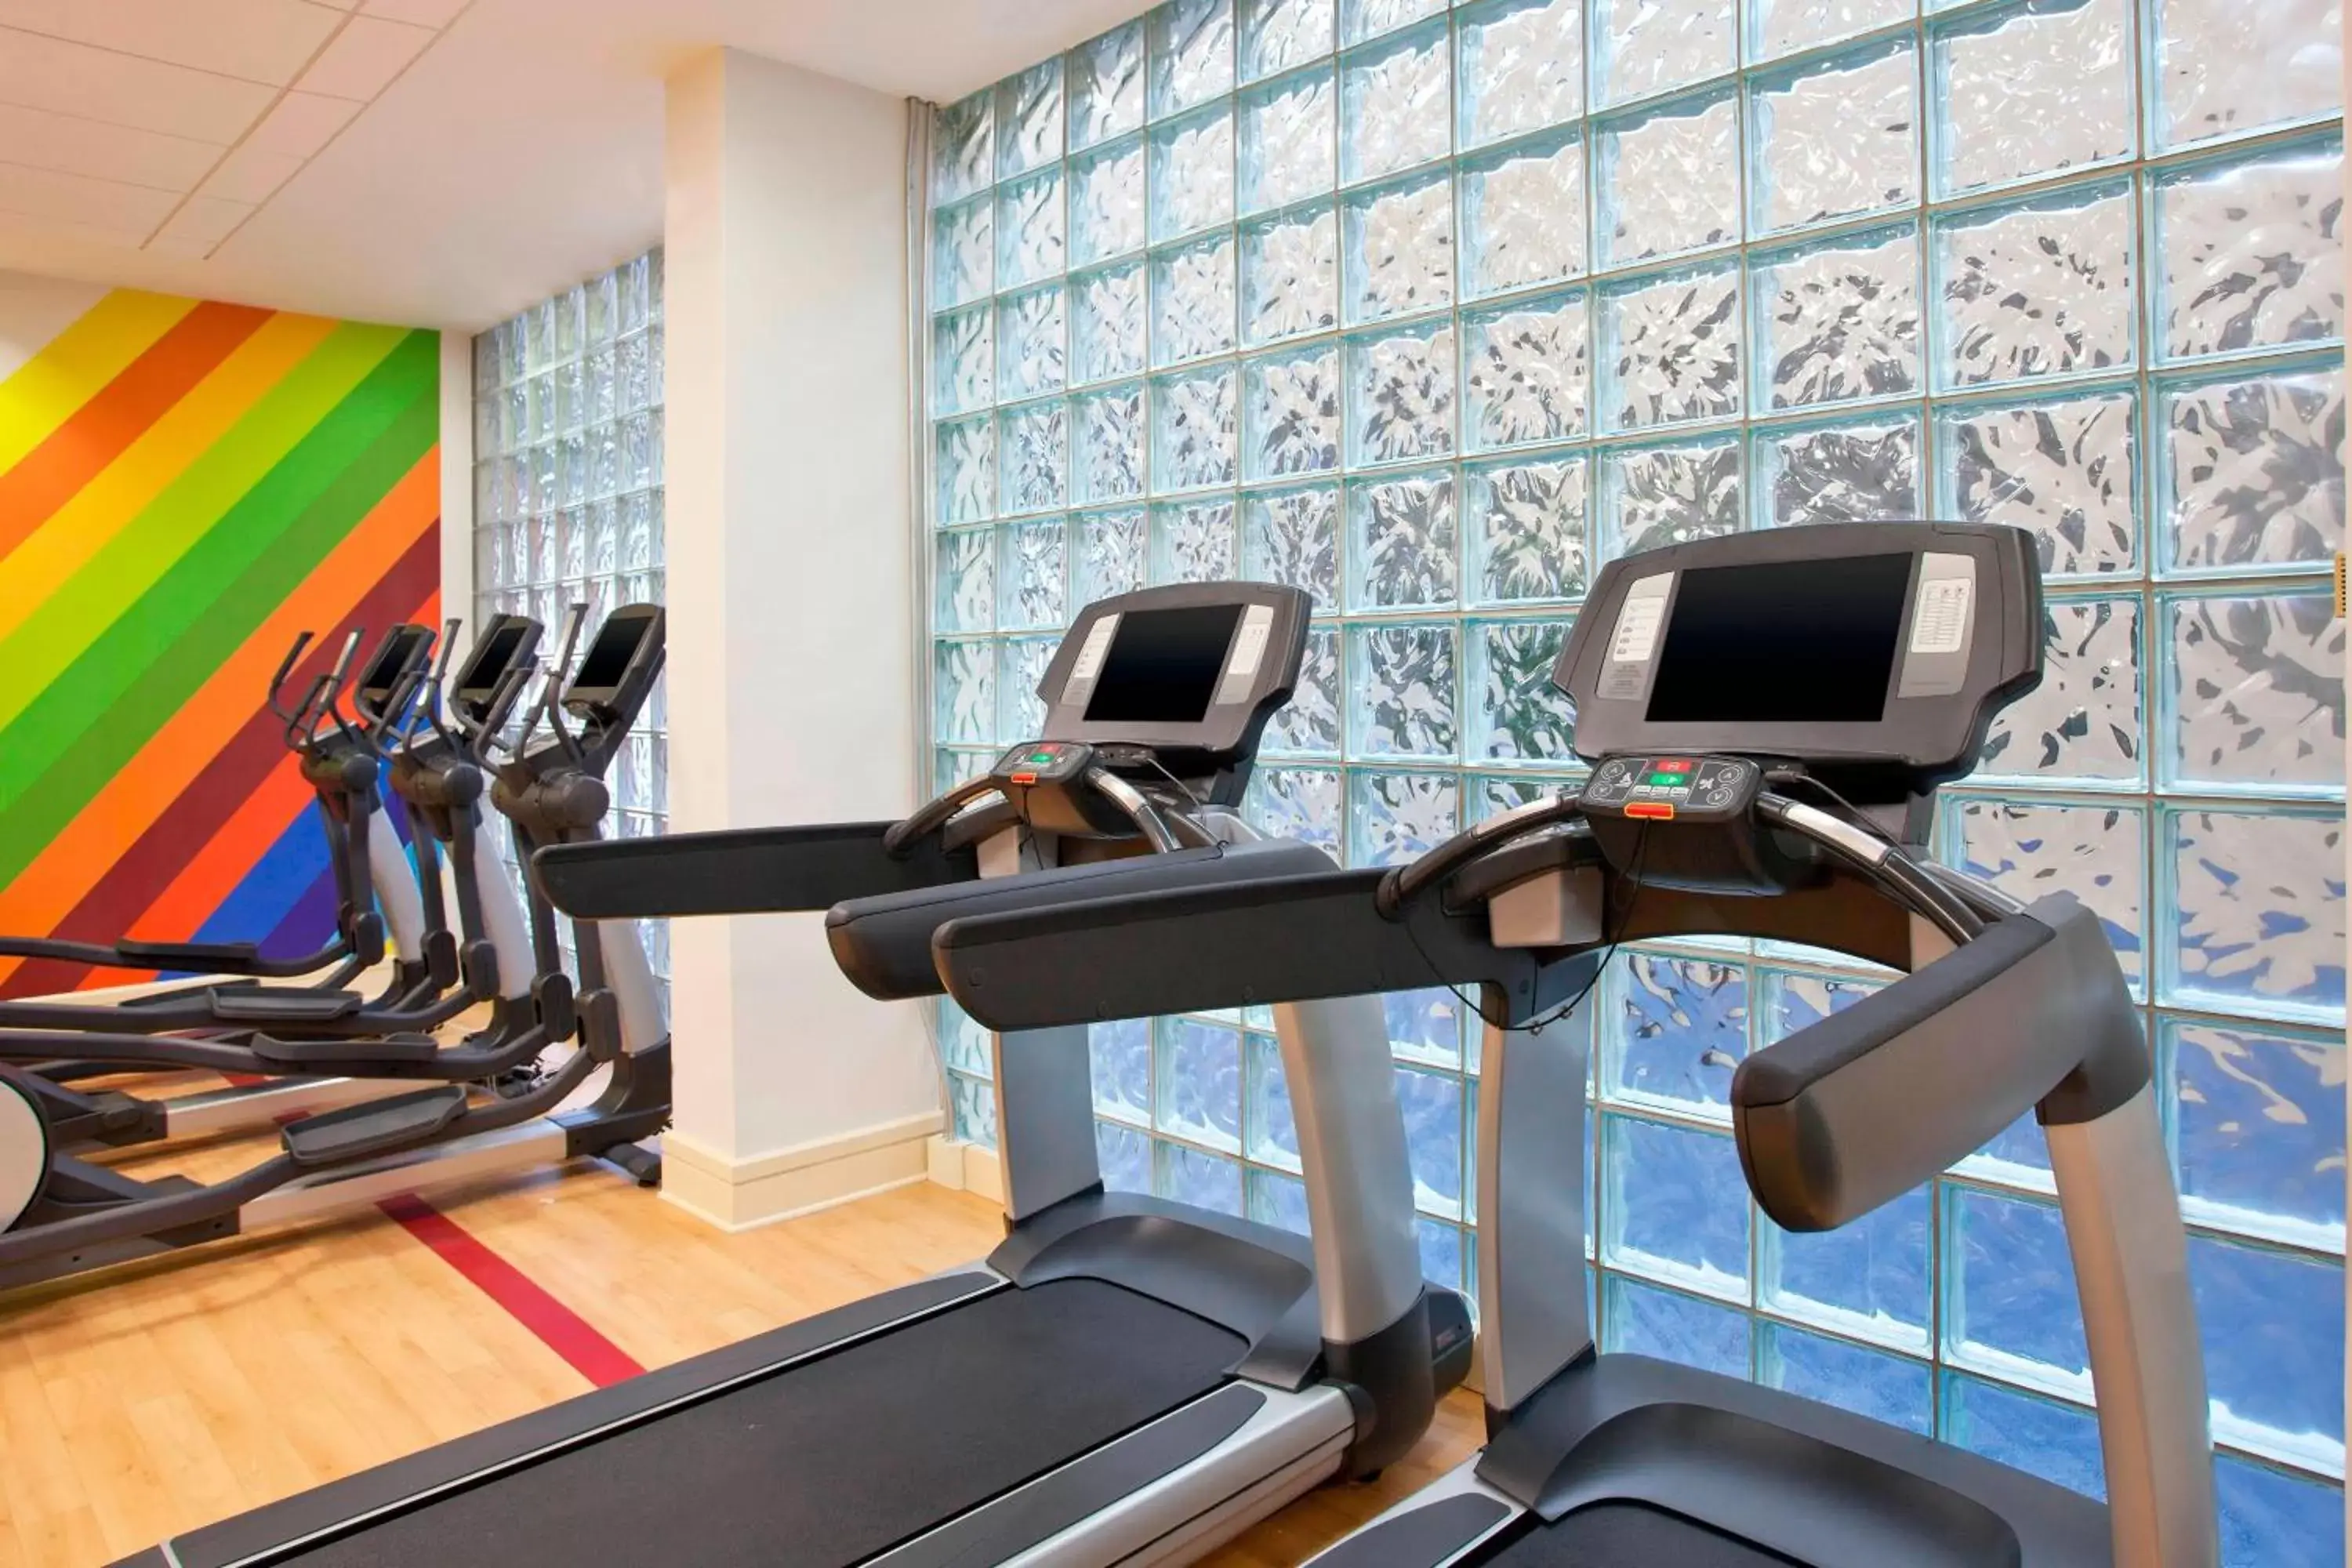 Fitness centre/facilities, Fitness Center/Facilities in Sheraton North Houston at George Bush Intercontinental